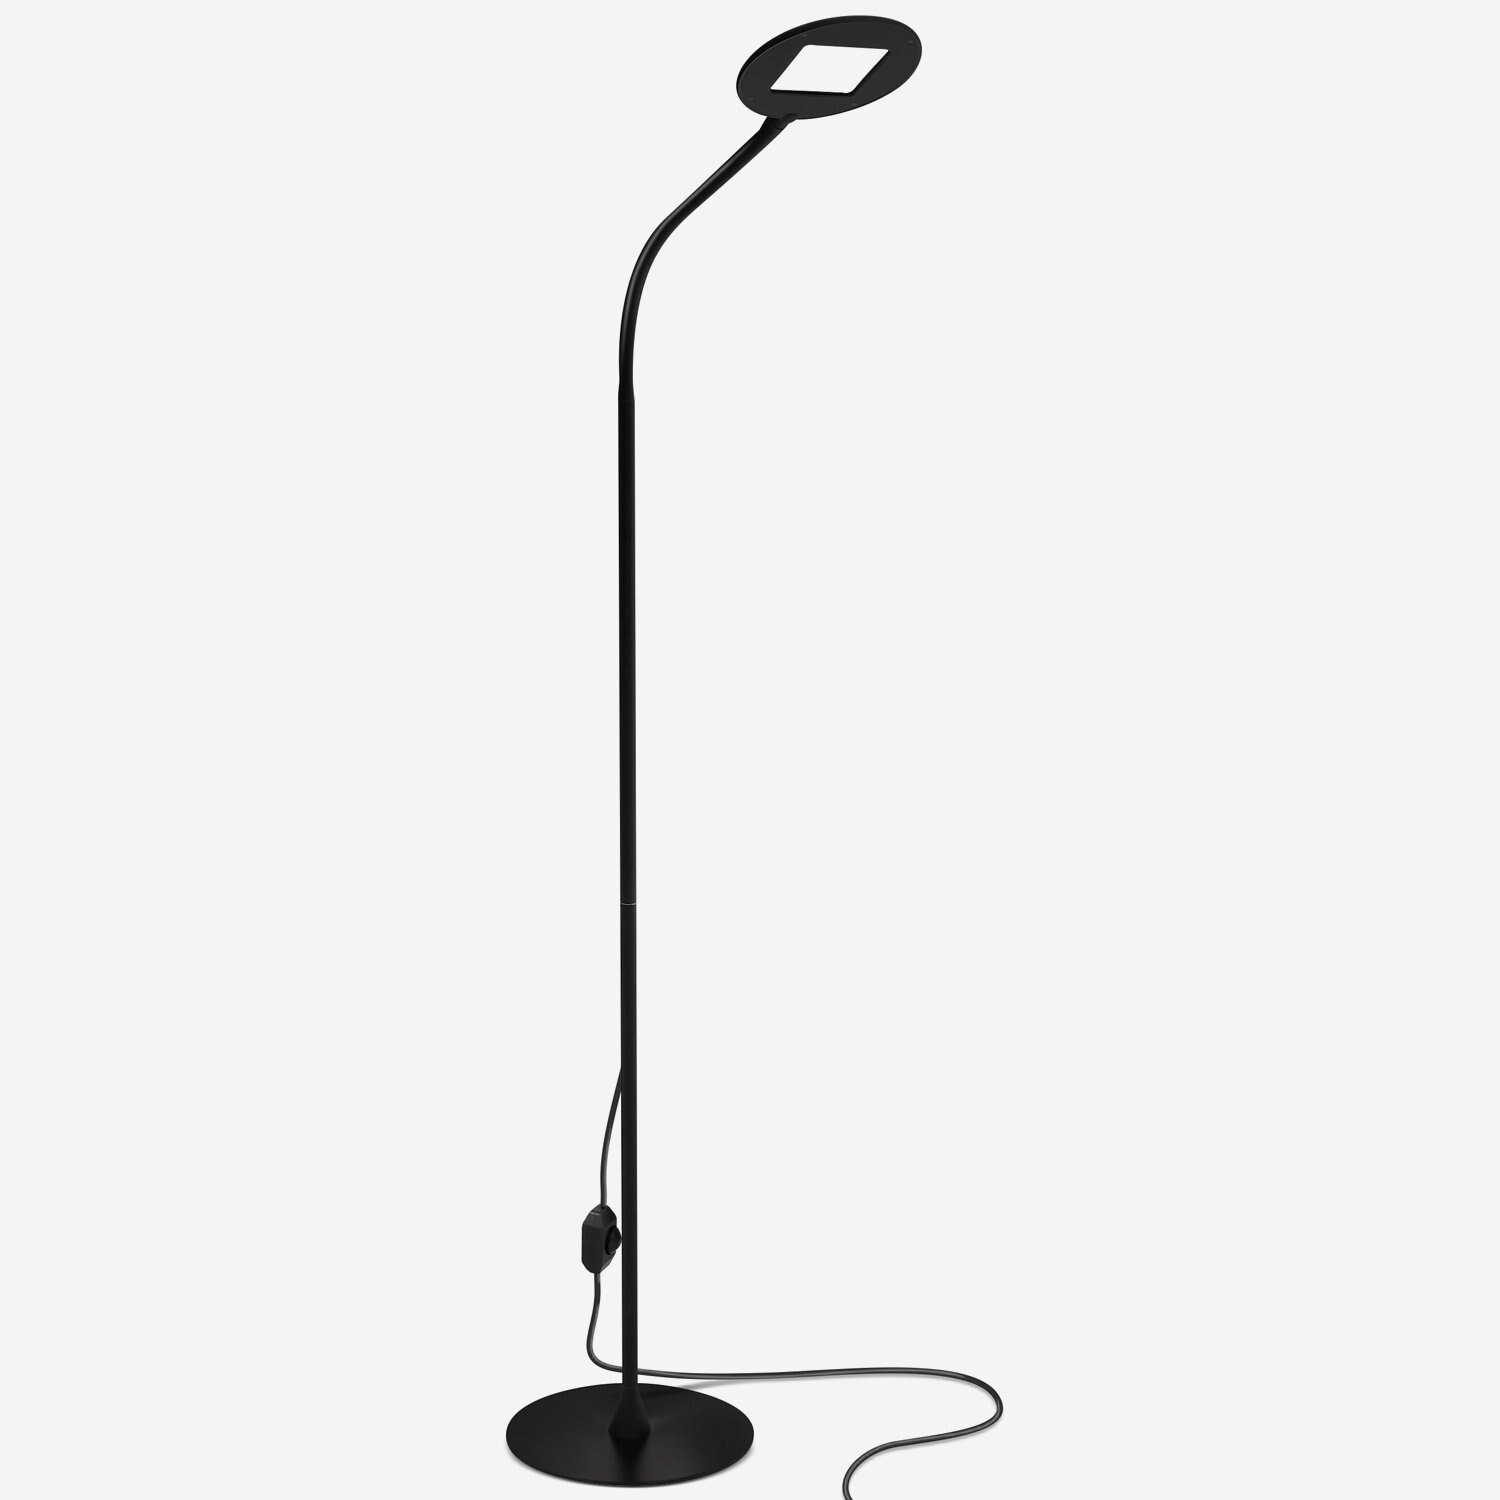 Contour Flex Led Floor Lamp For Reading Crafts Office Tasks in measurements 1500 X 1500